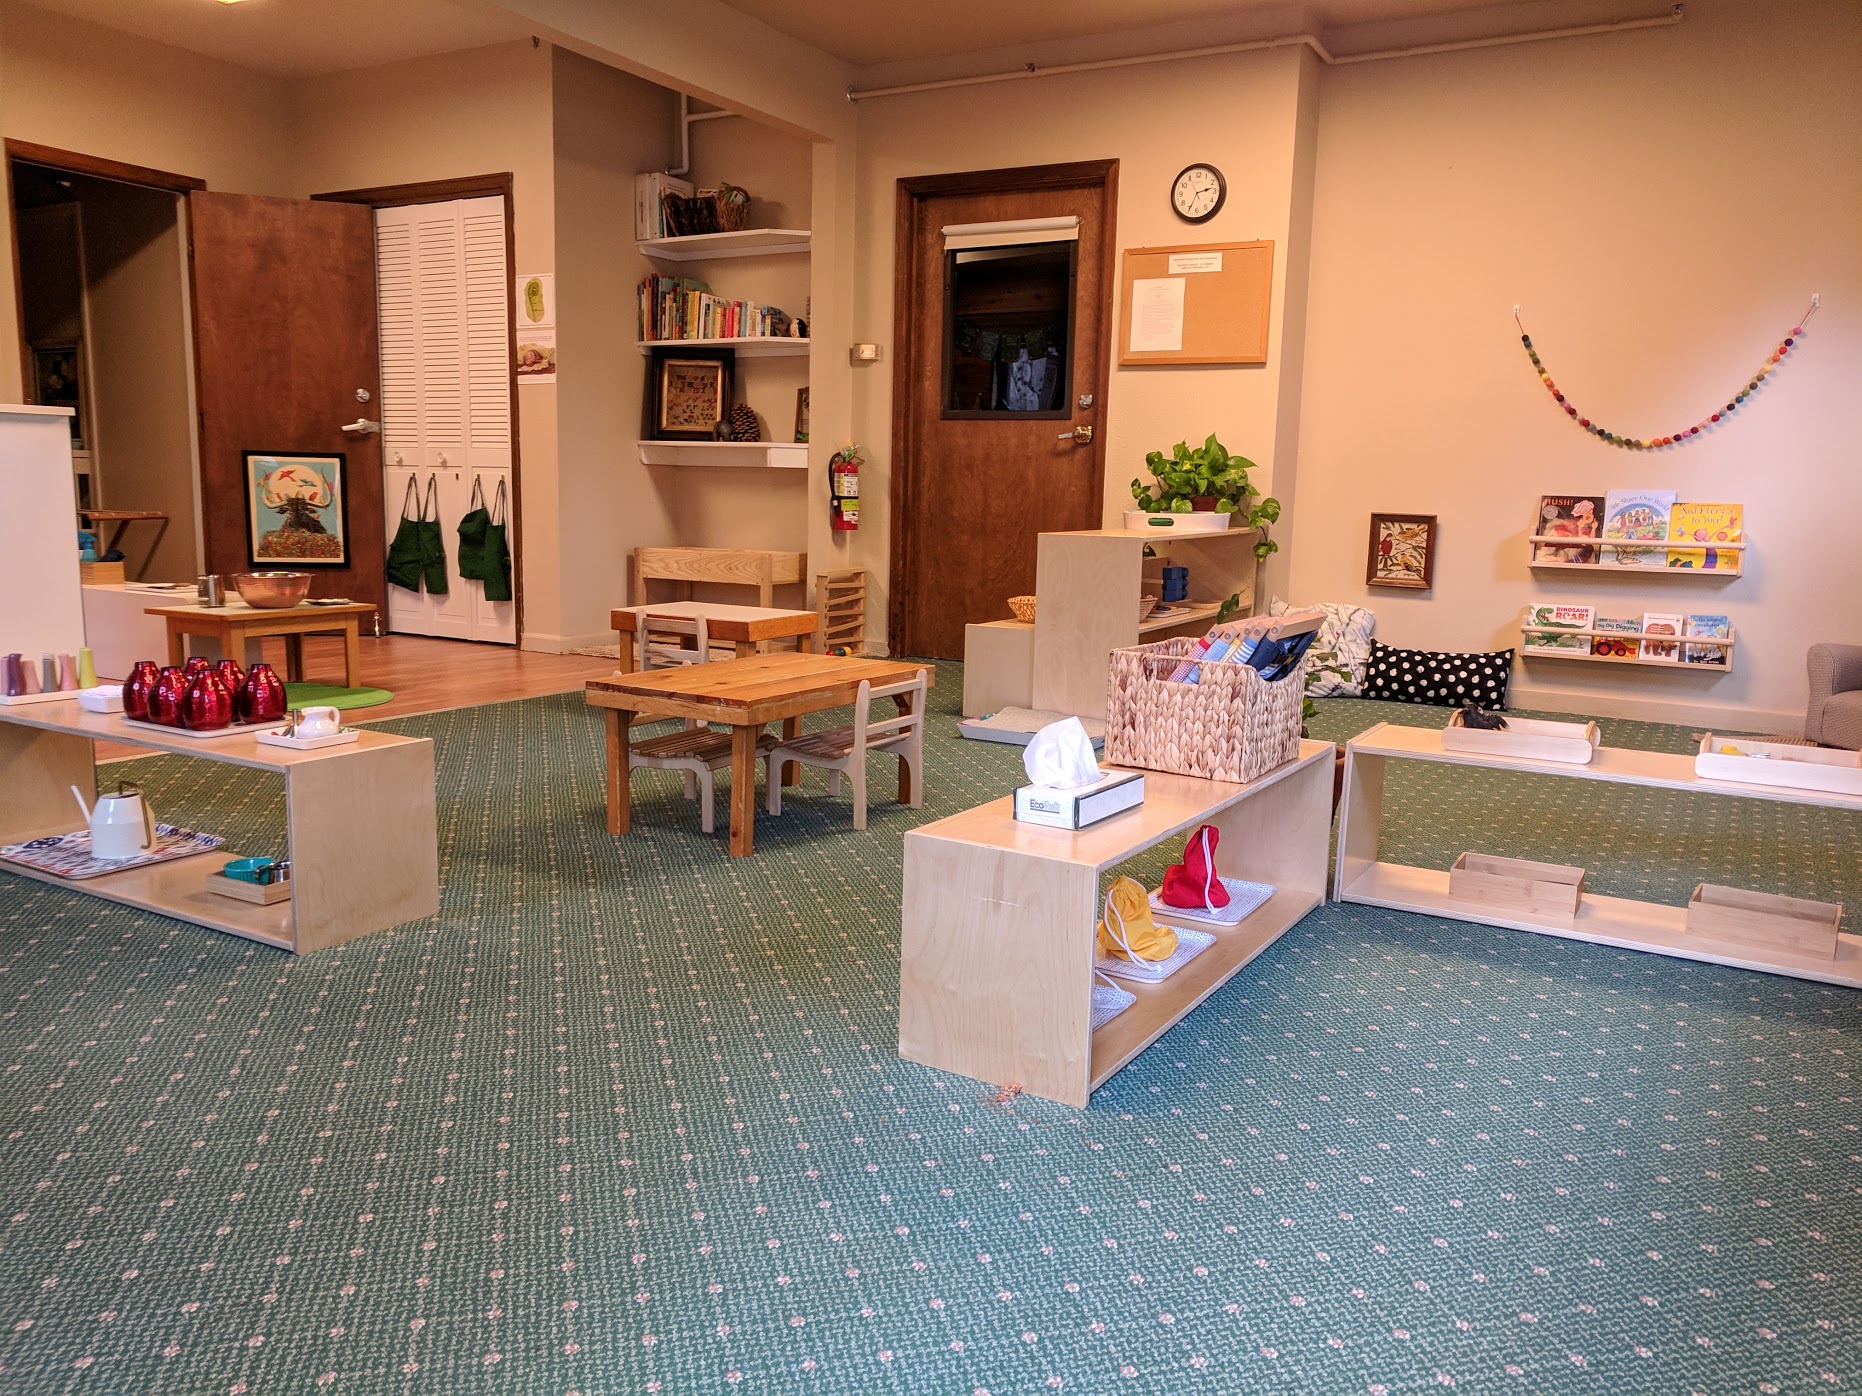  The Toddler Community The Montessori School of Evergreen 2018 